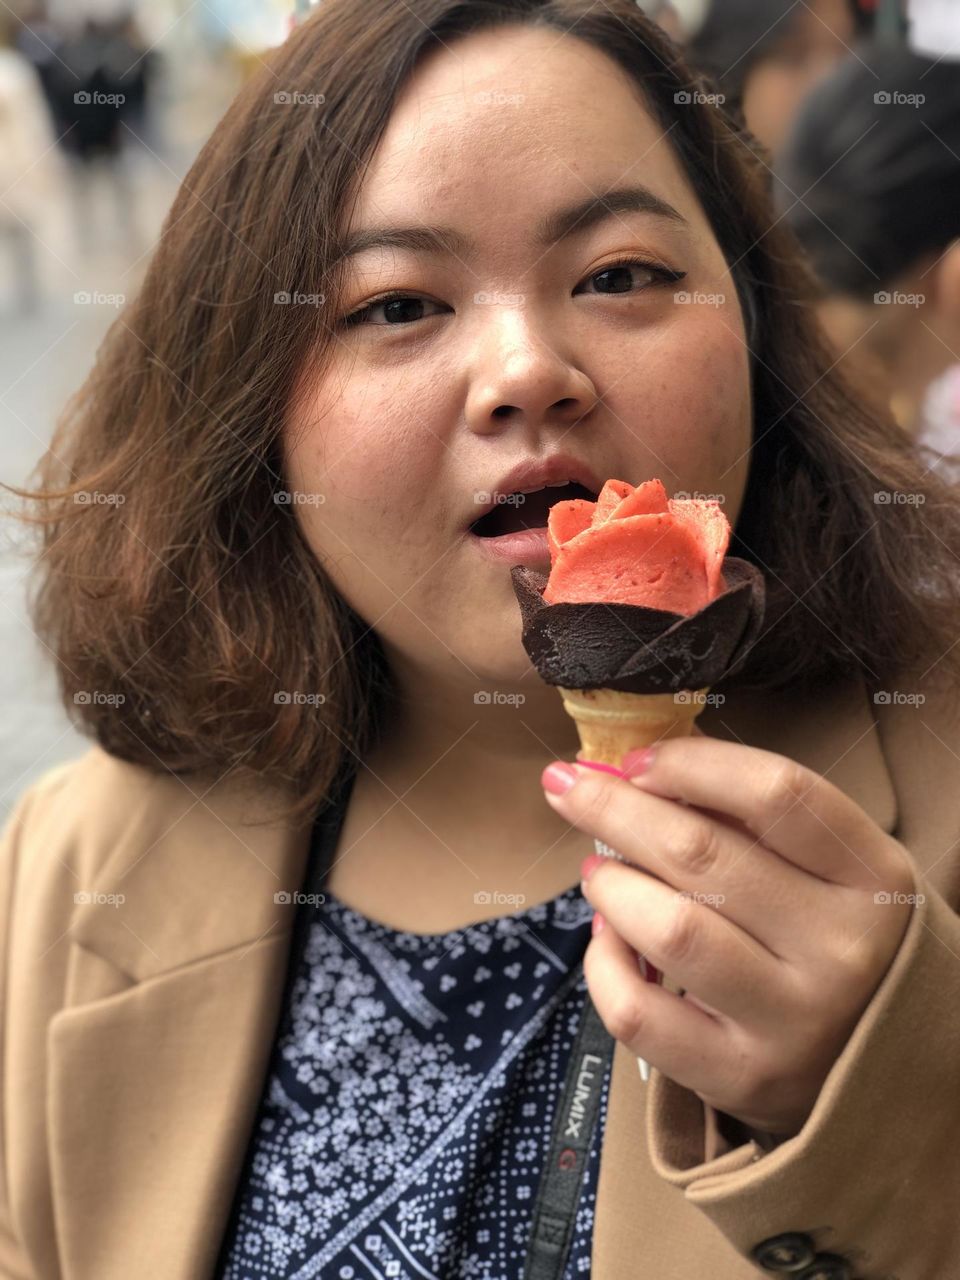 A girl happy holding an ice cream